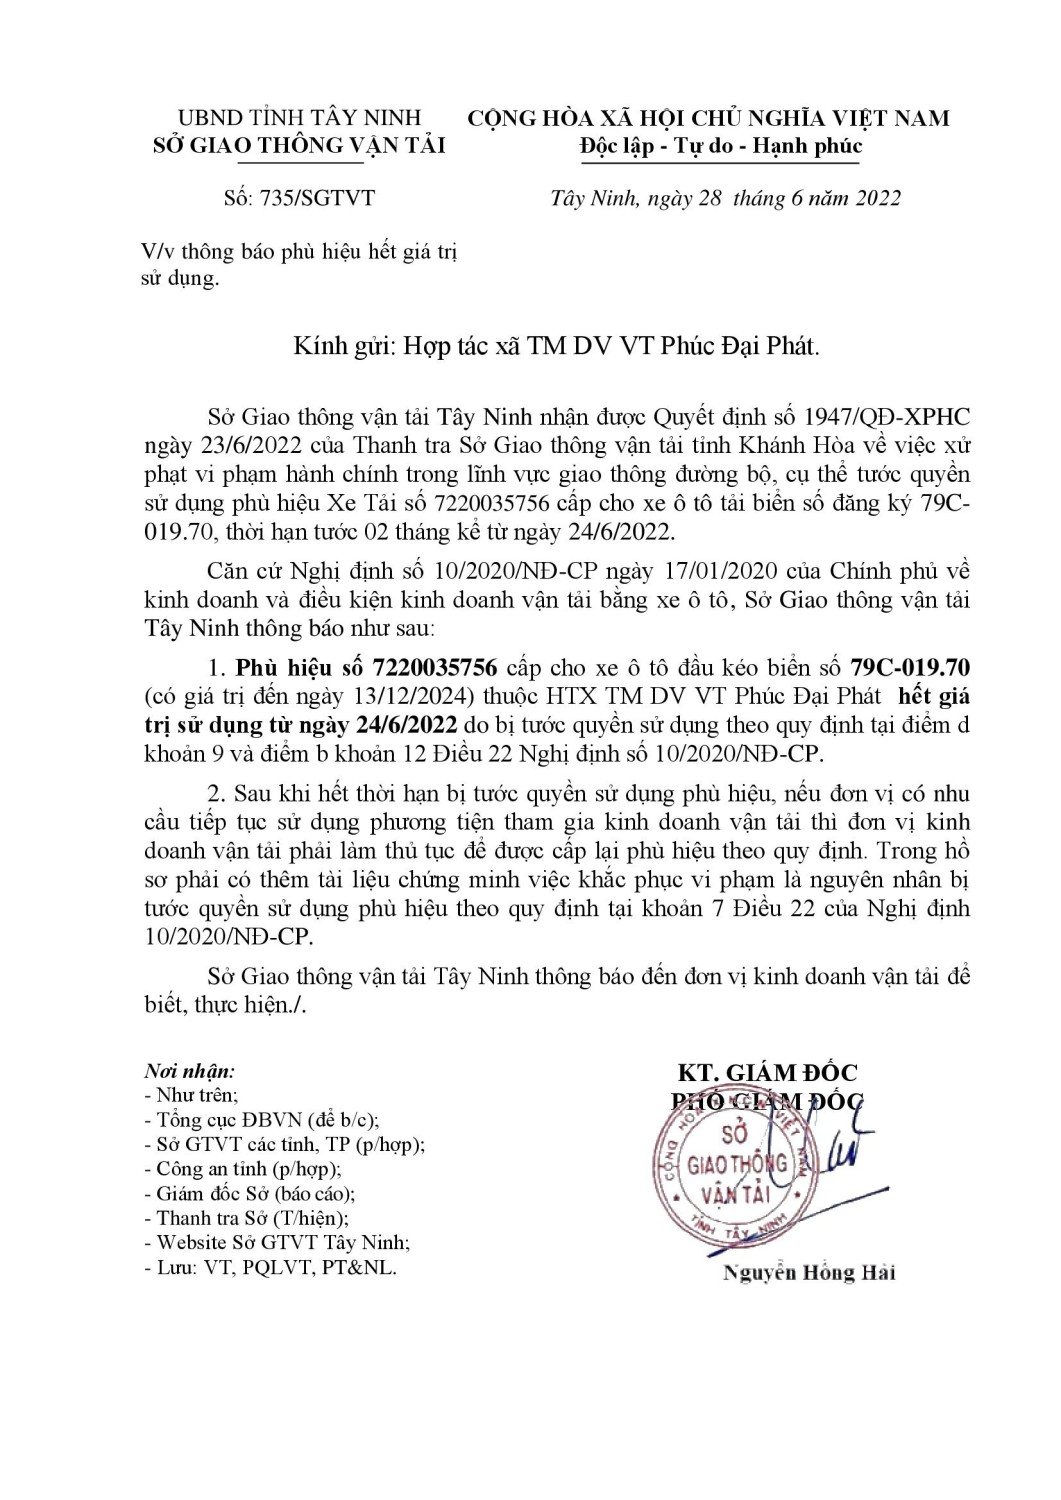 735 Thong bao PH het gia tri SD 79C01970 28 06 2022 Signed